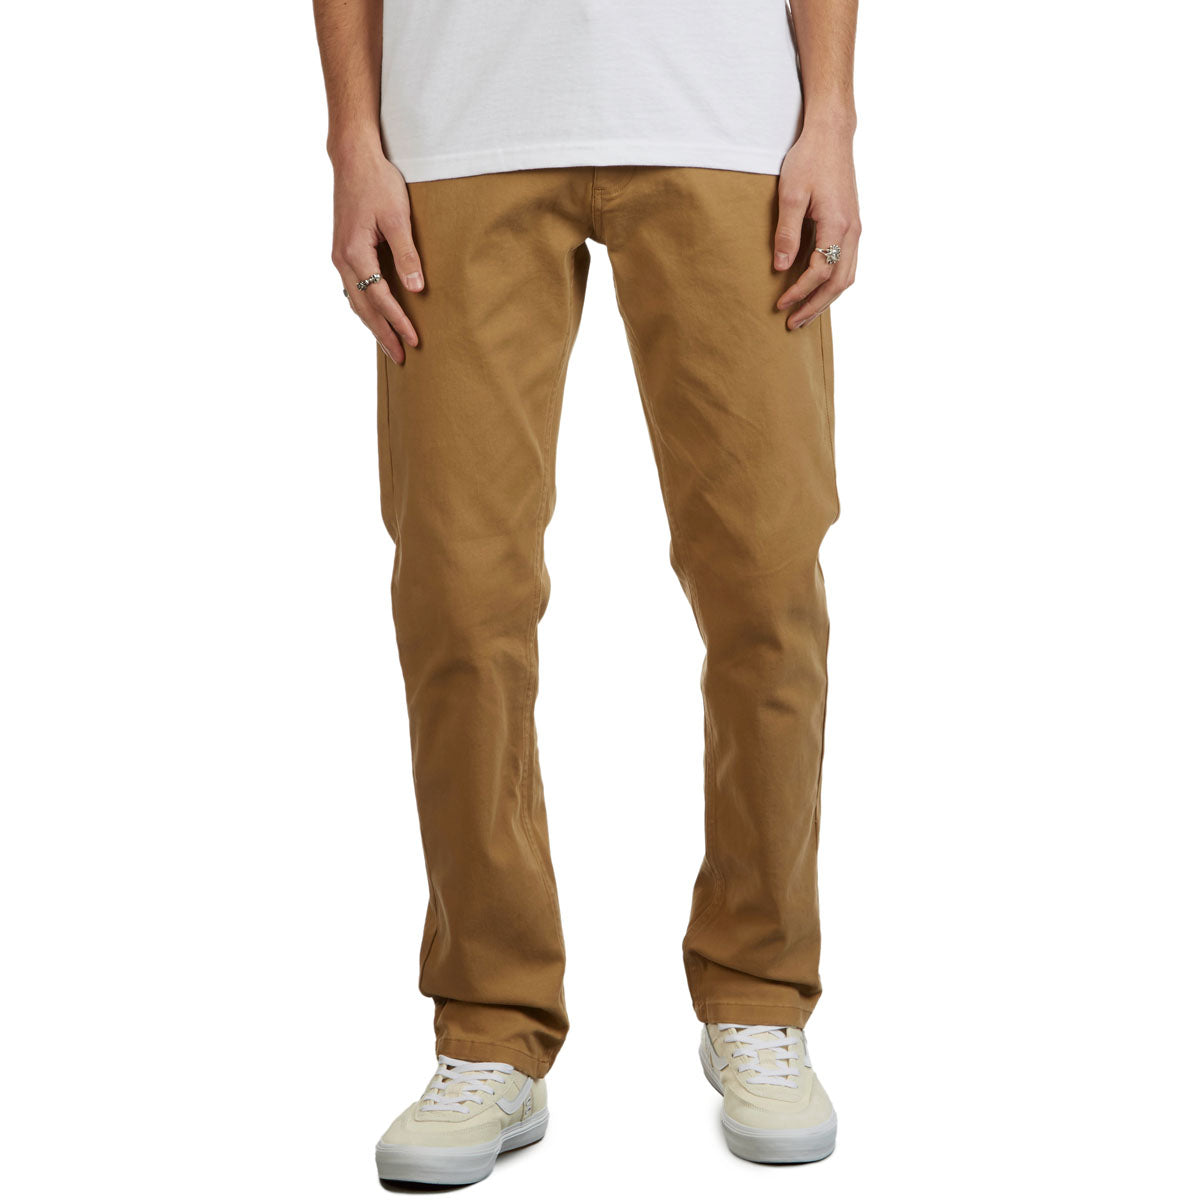 CCS Standard Plus Straight Chino Pants - Khaki image 1